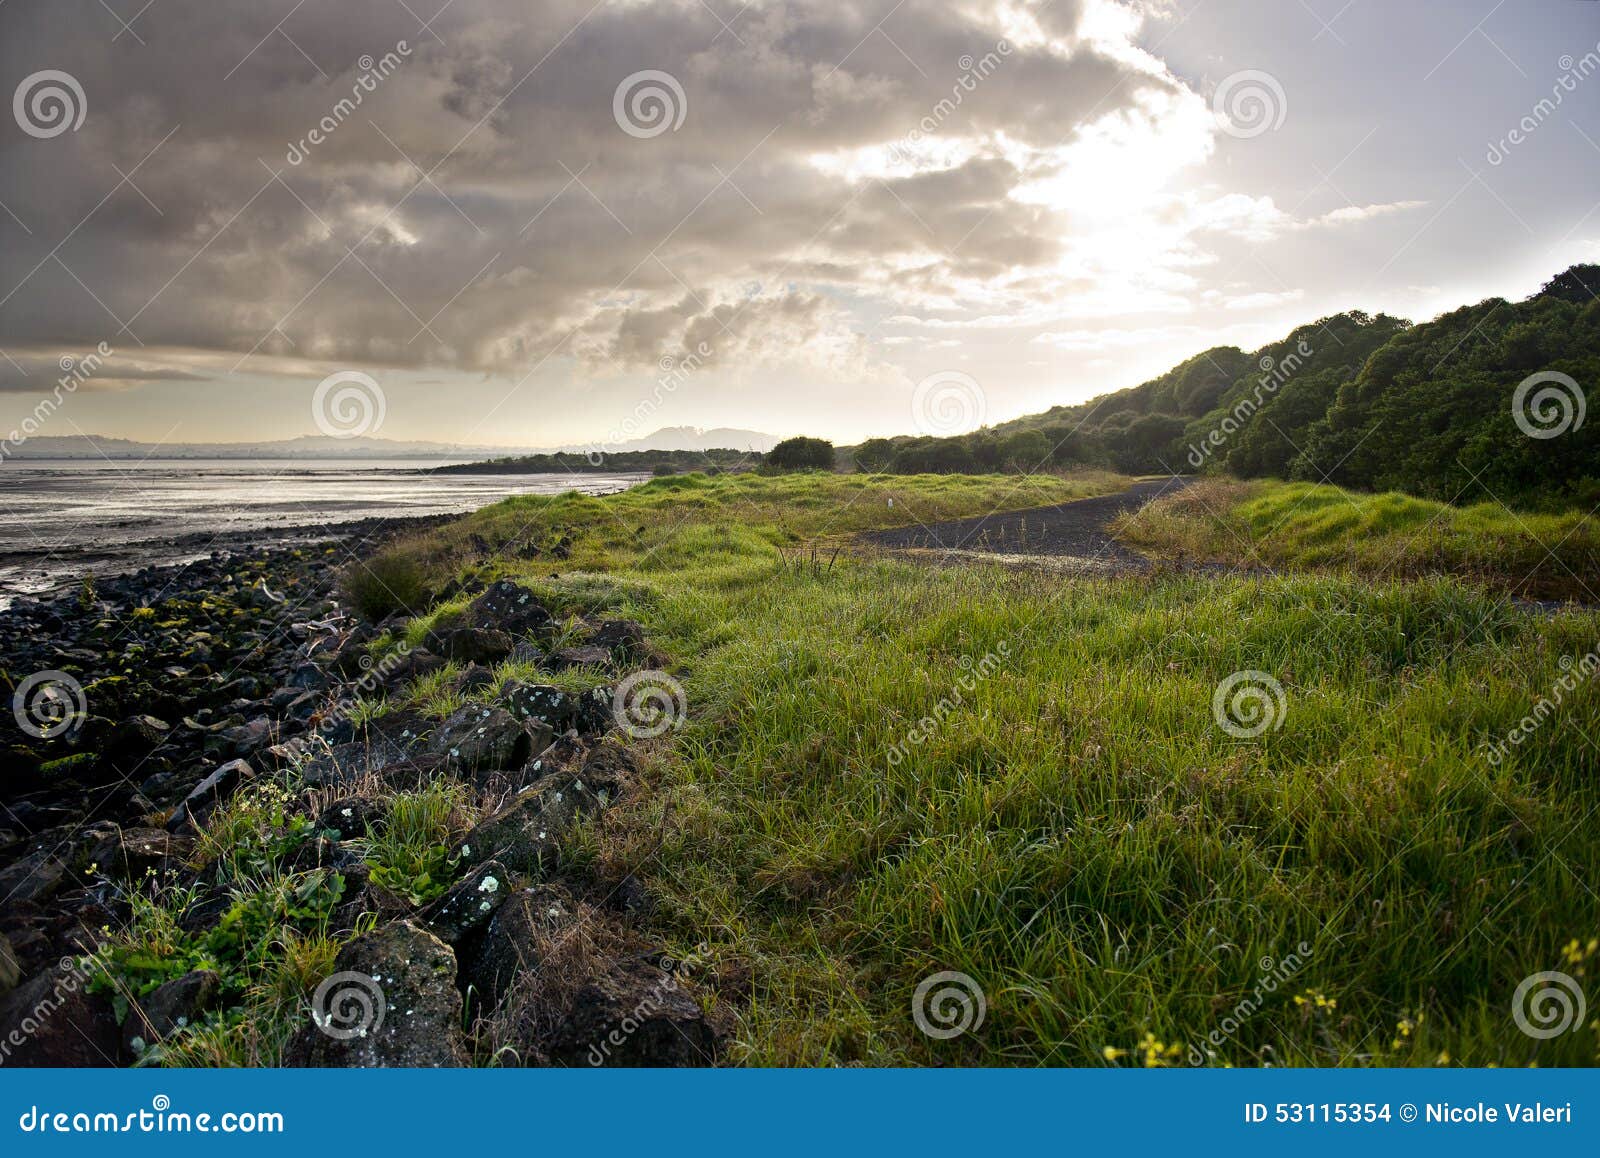 Underlegen fusion smør Auckland Landscape stock photo. Image of newzealand, mindless - 53115354